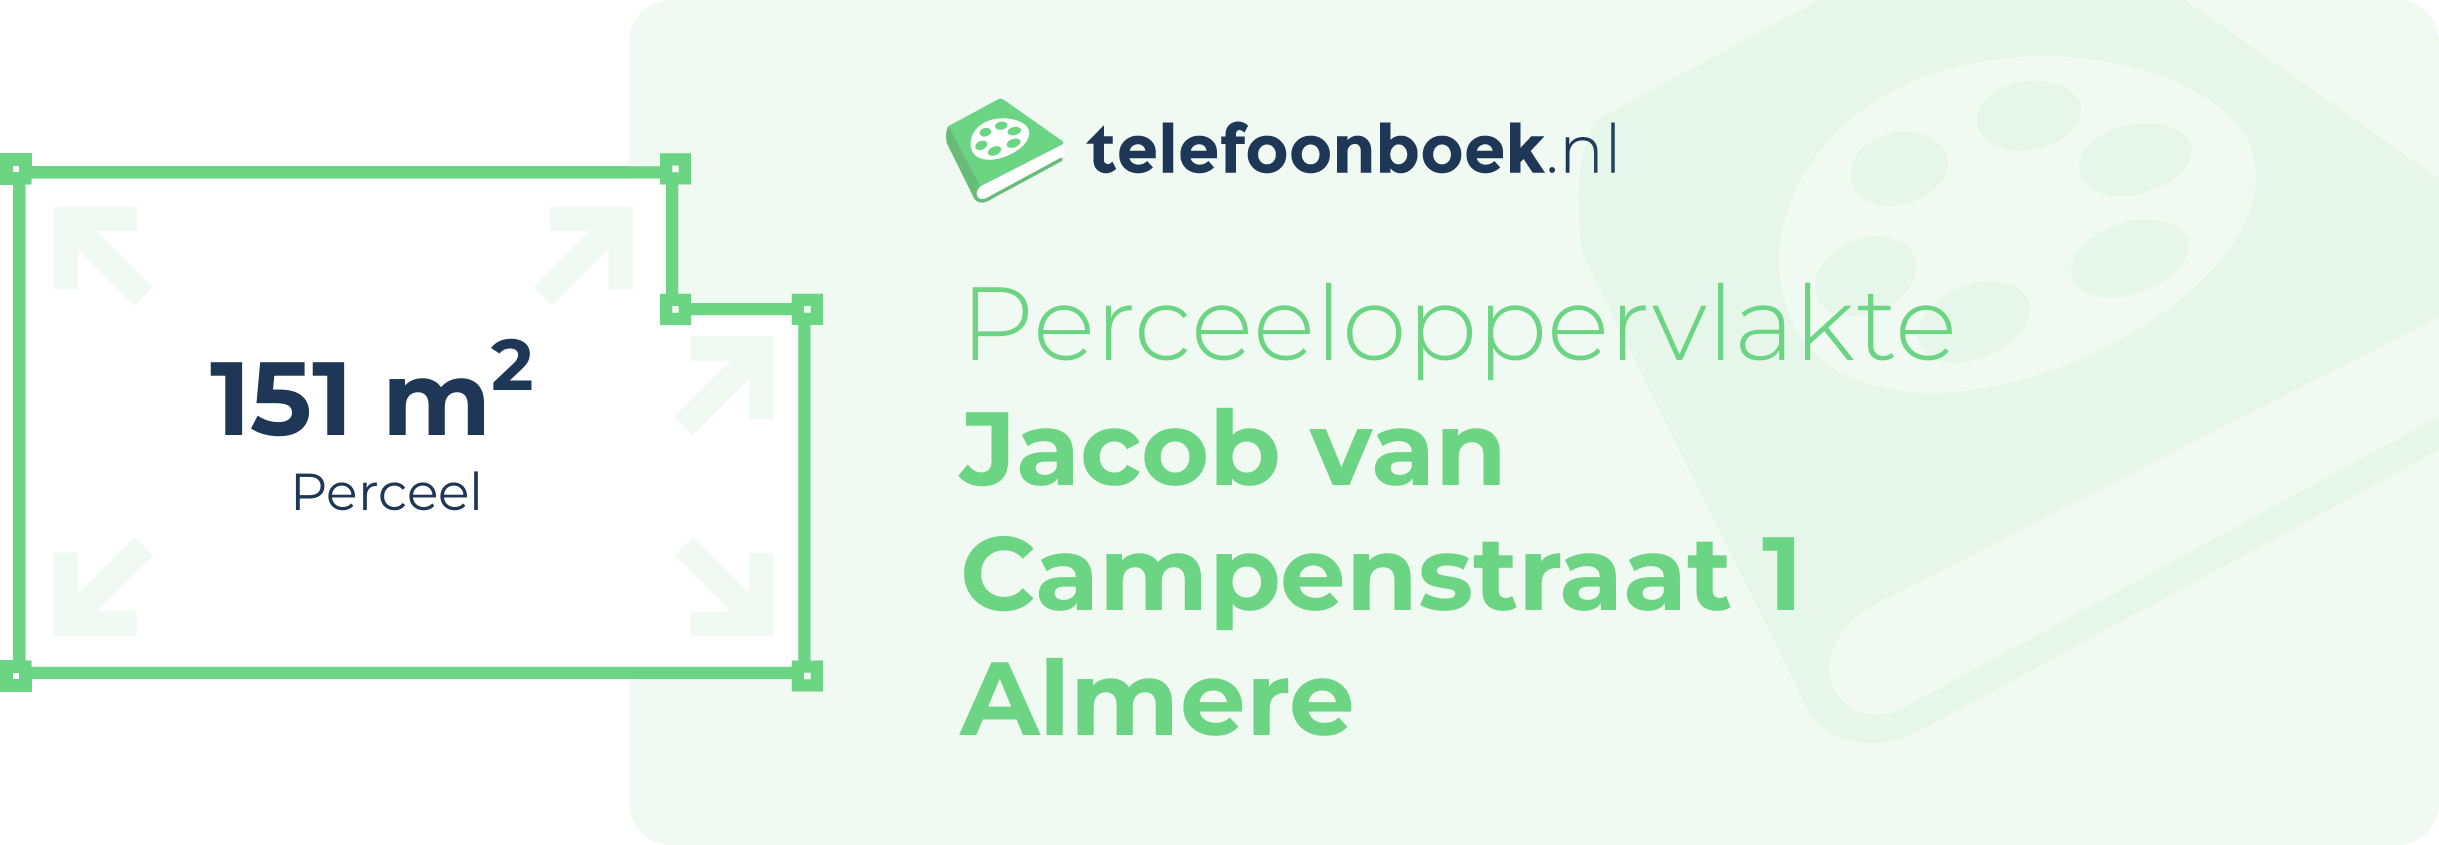 Perceeloppervlakte Jacob Van Campenstraat 1 Almere